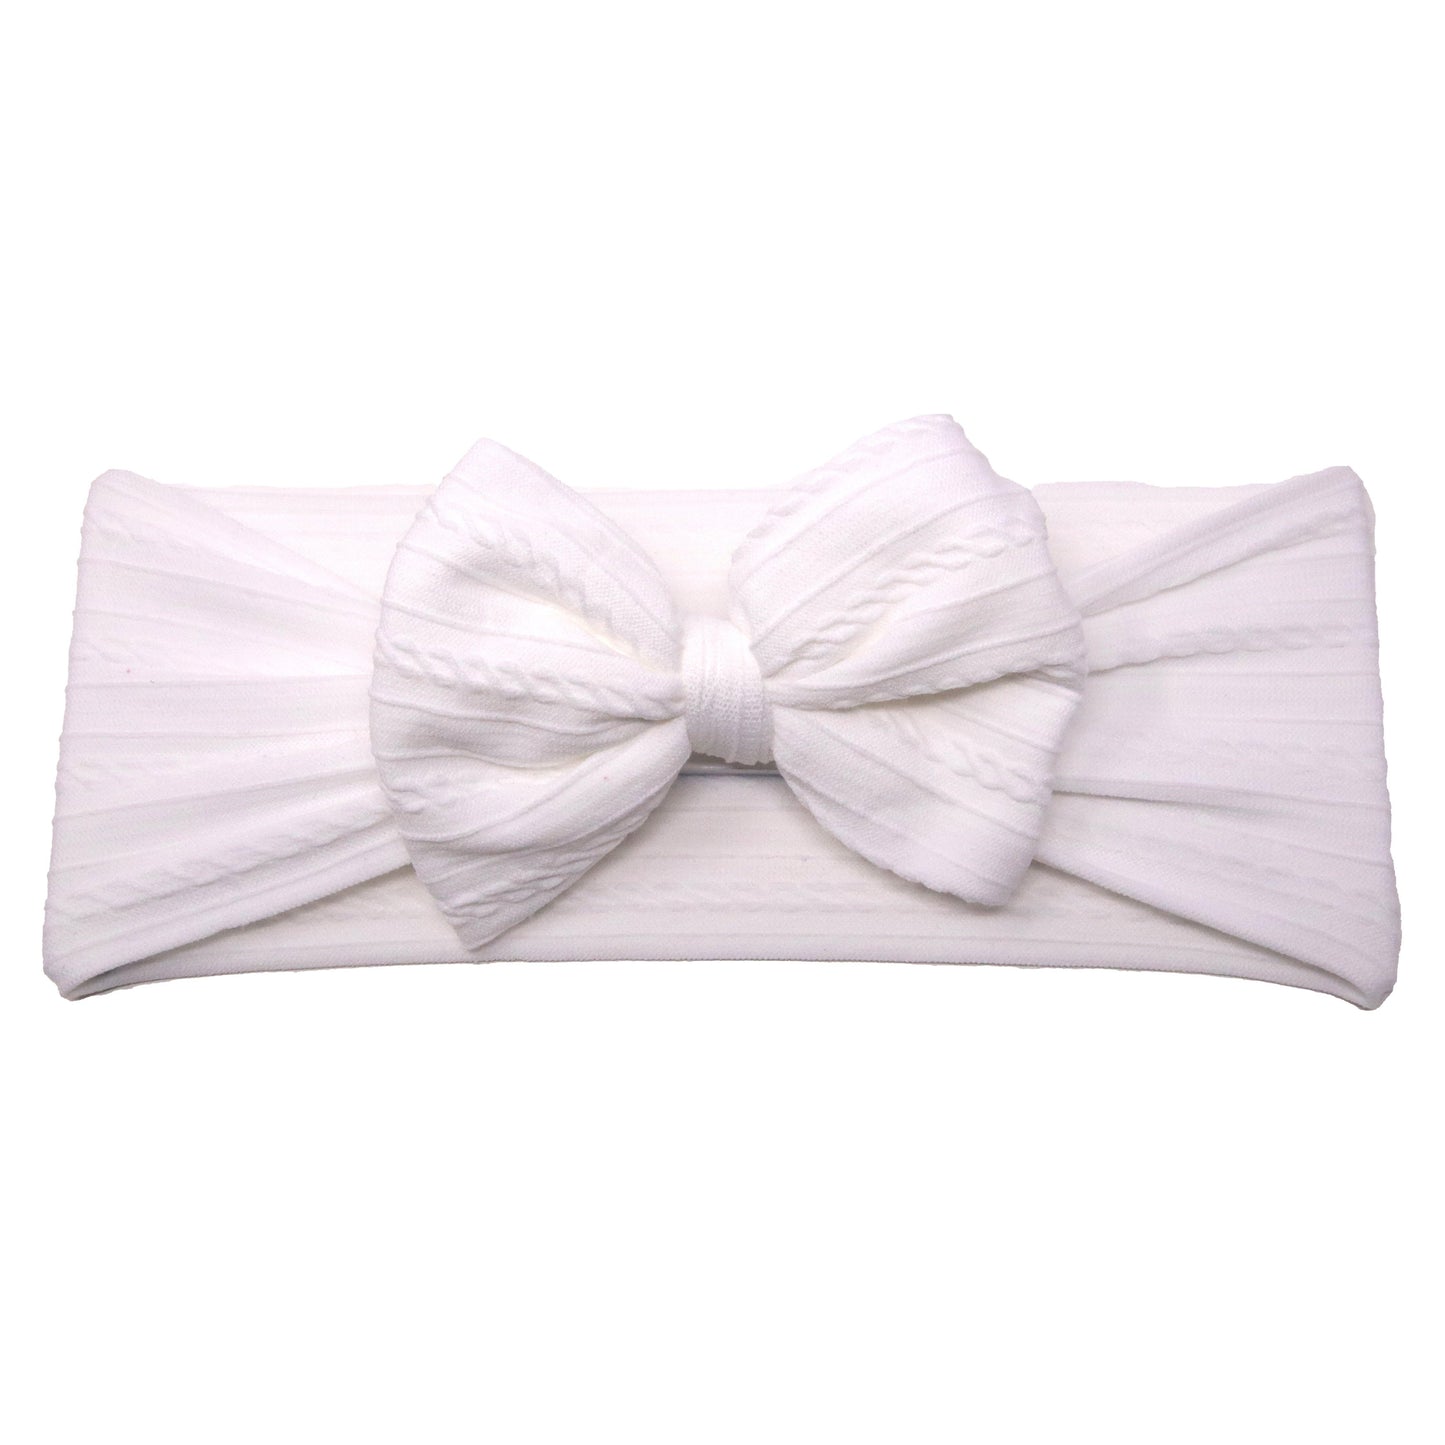 White Braid Knit Bow Headwrap 4"